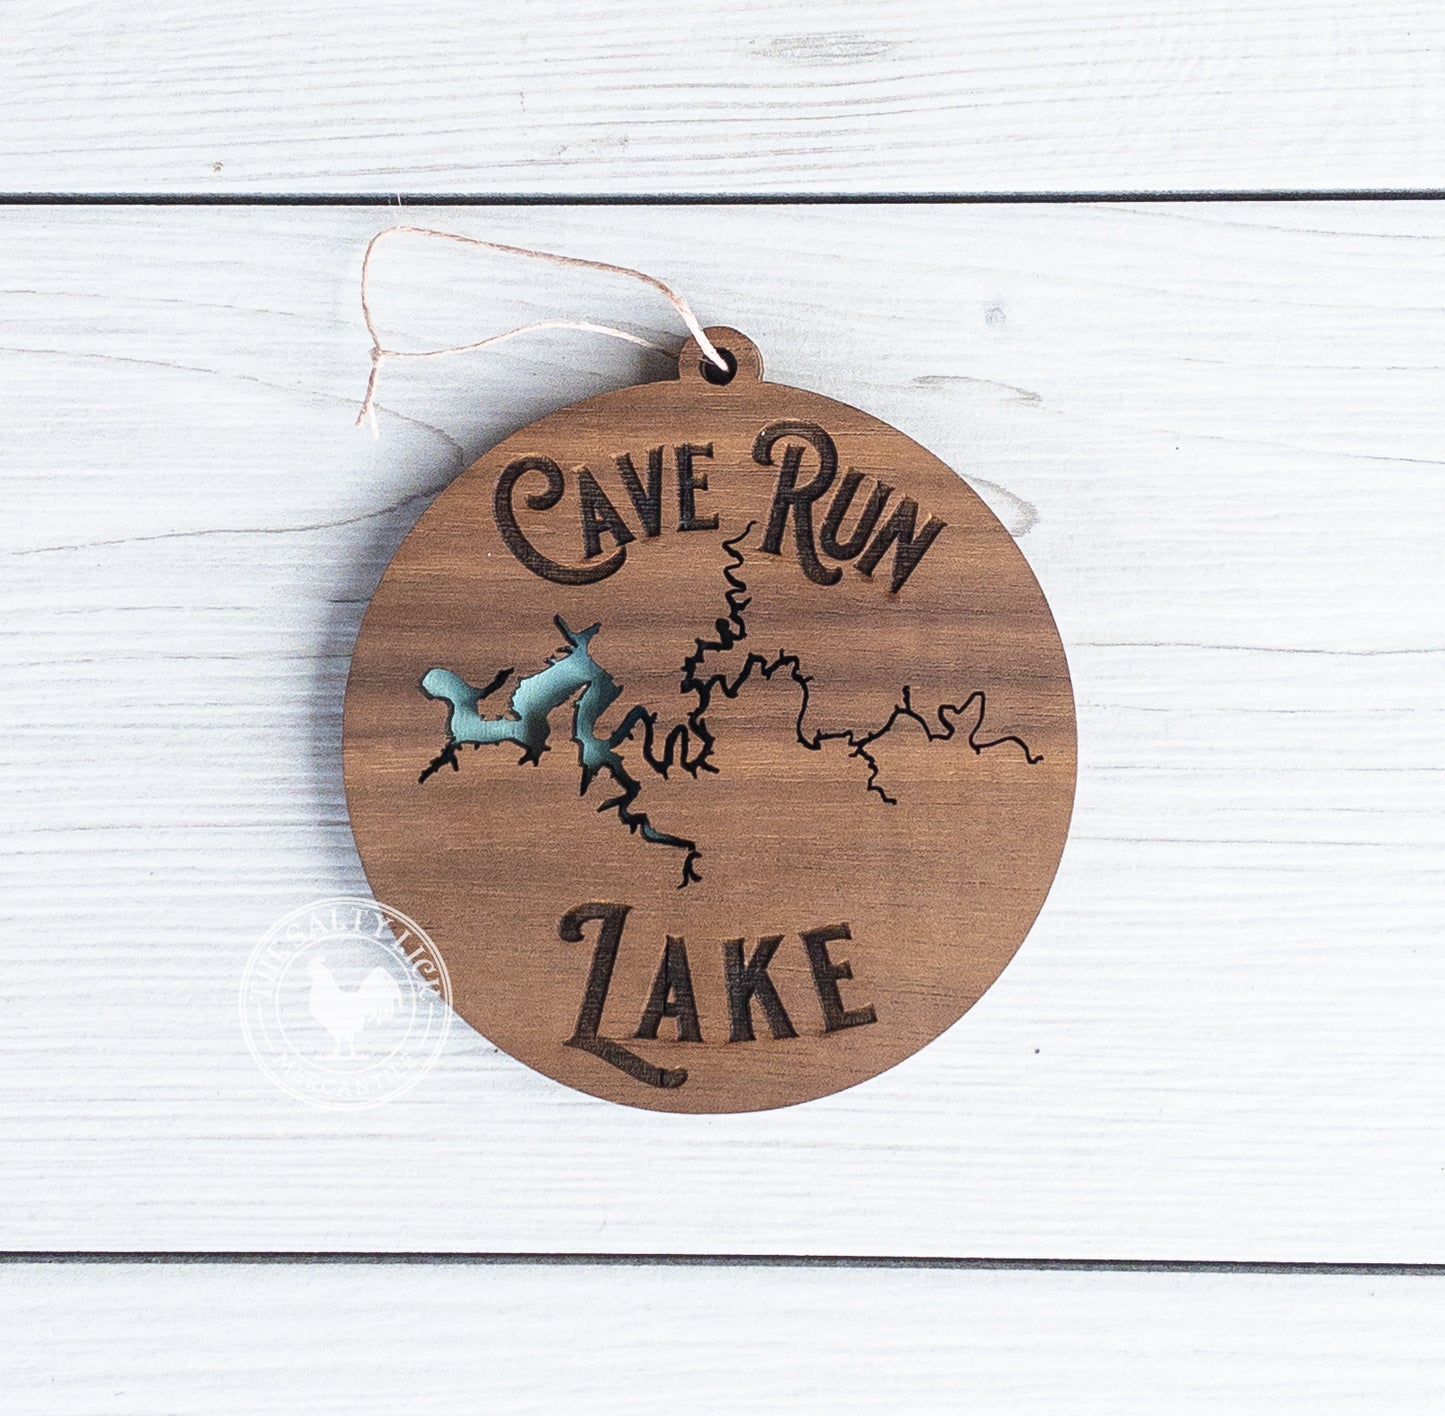 Cave Run Lake Ornament - The Salty Lick Mercantile